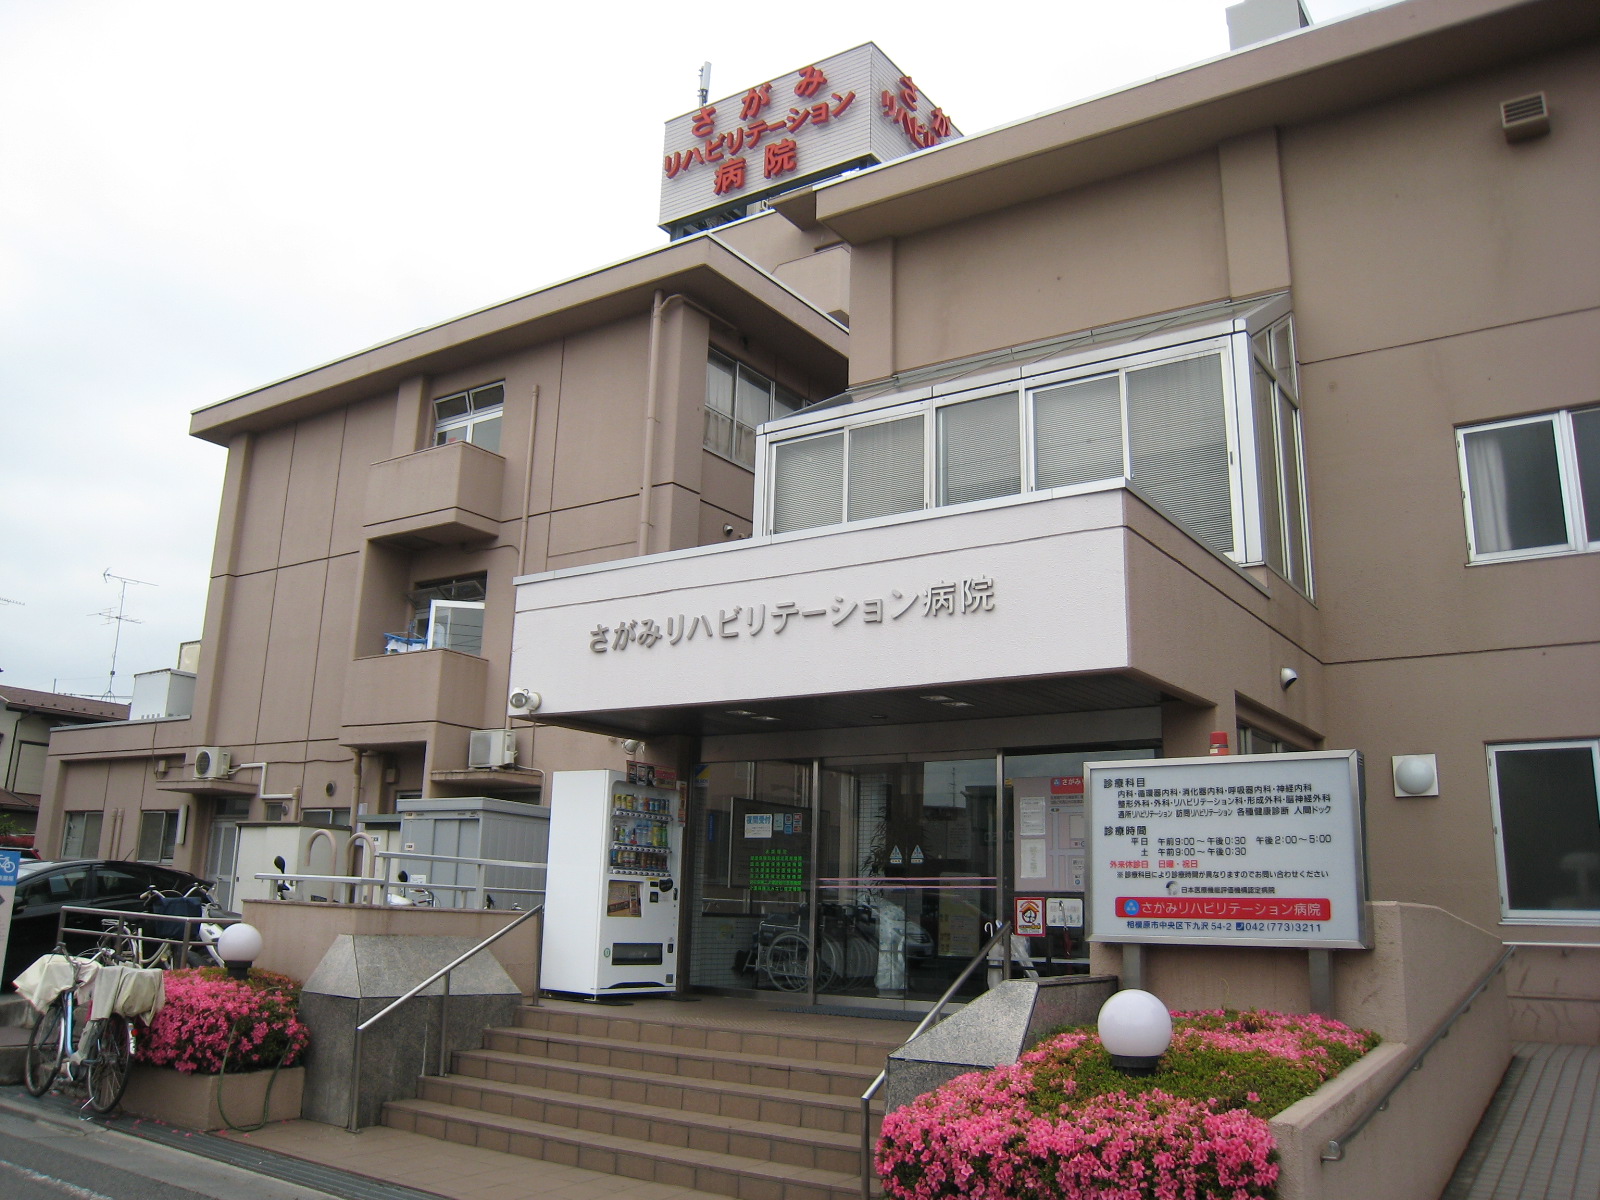 Hospital. Sagami Rehabilitation Hospital (Hospital) to 400m